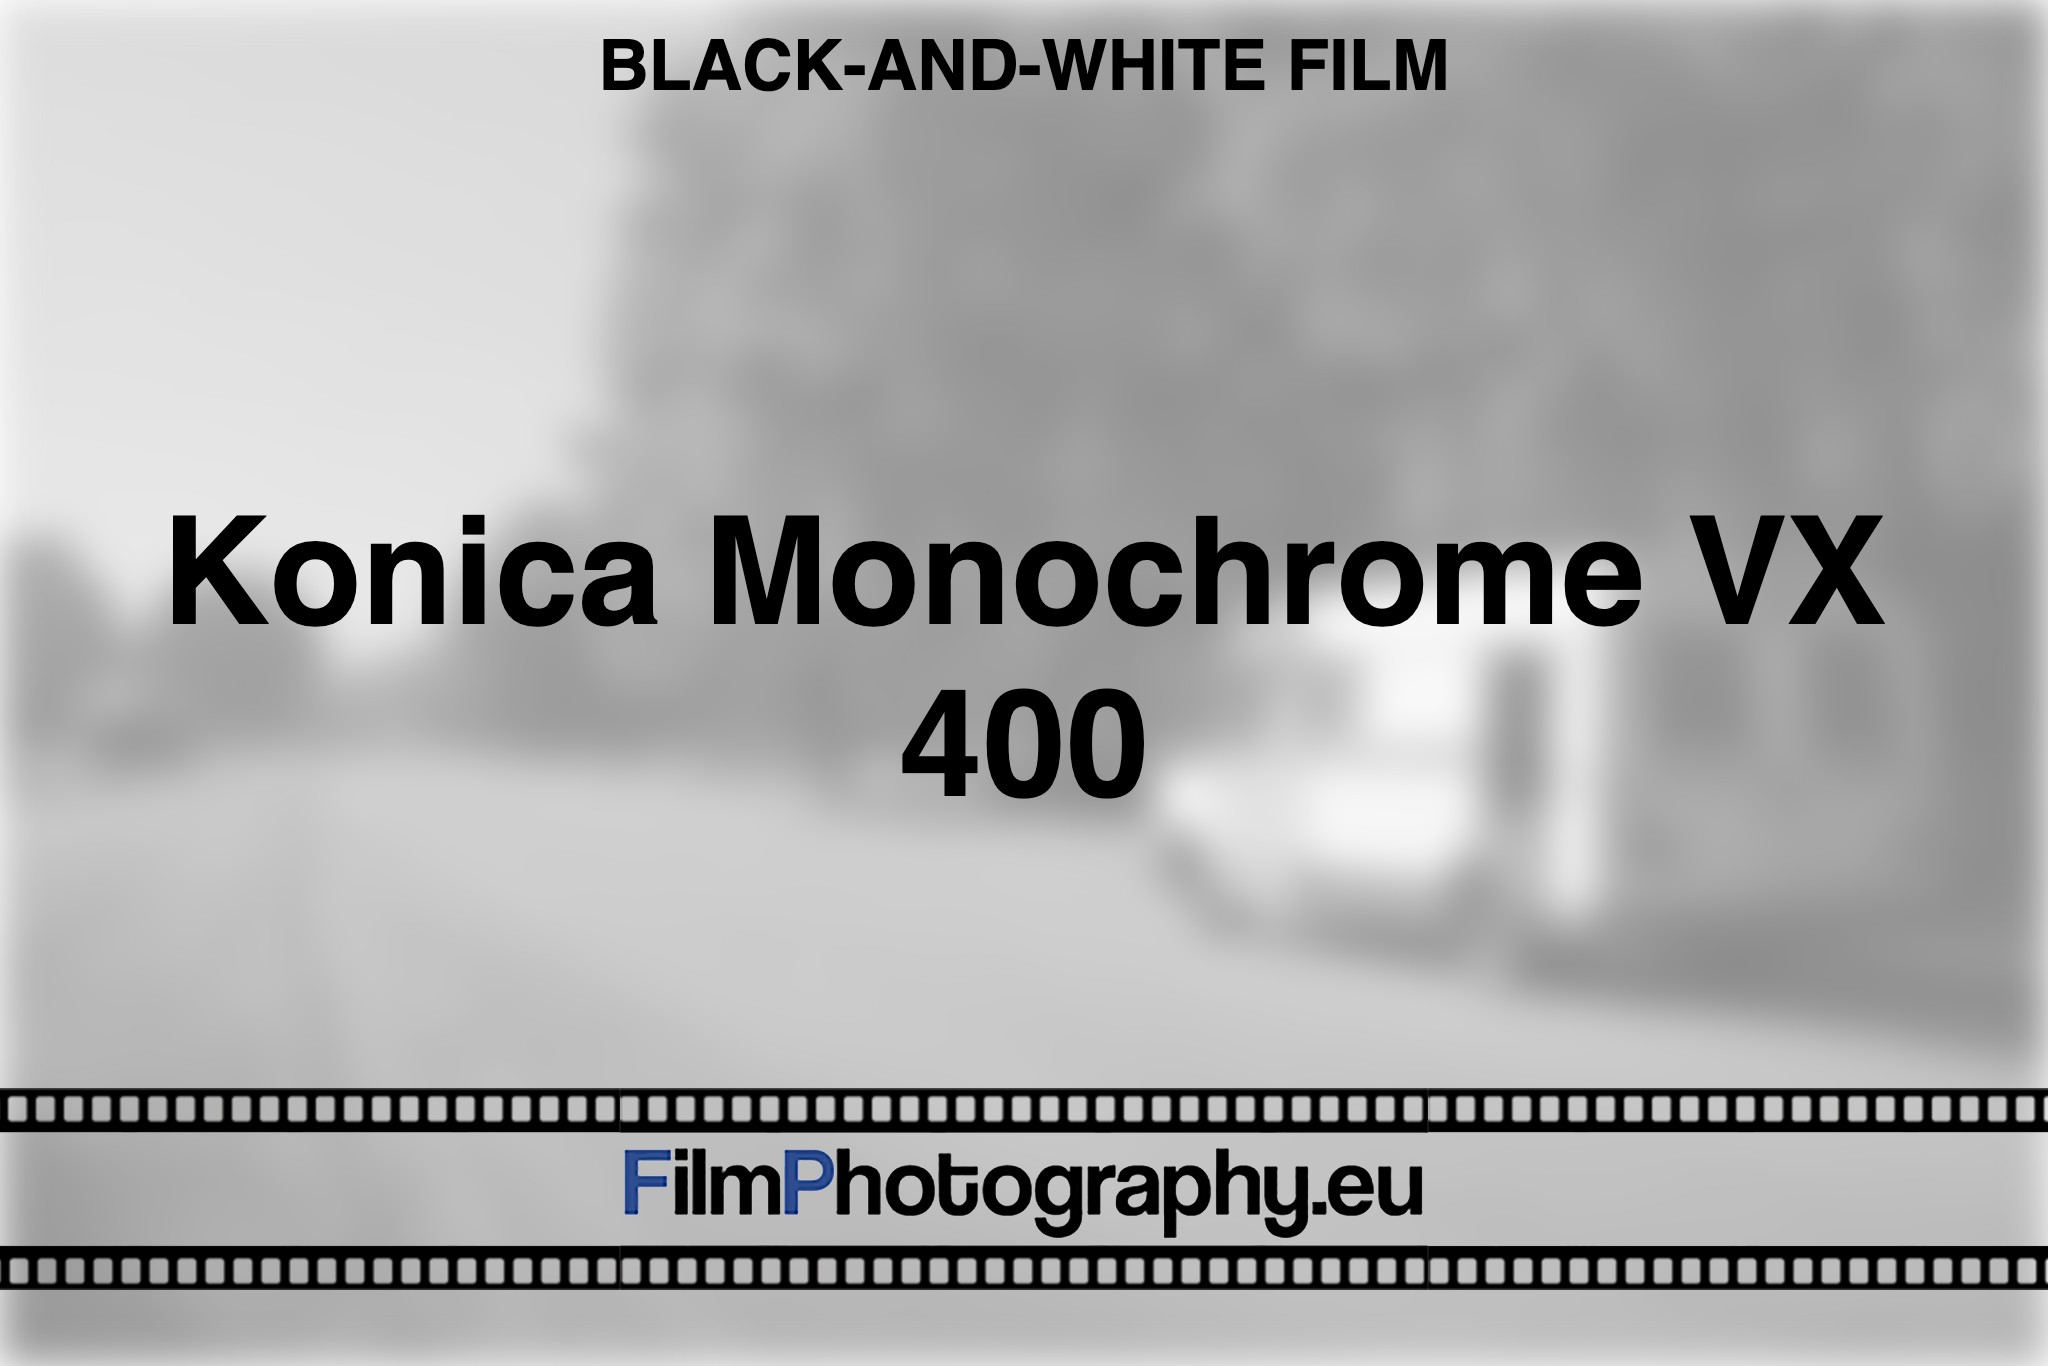 konica-monochrome-vx-400-black-and-white-film-bnv